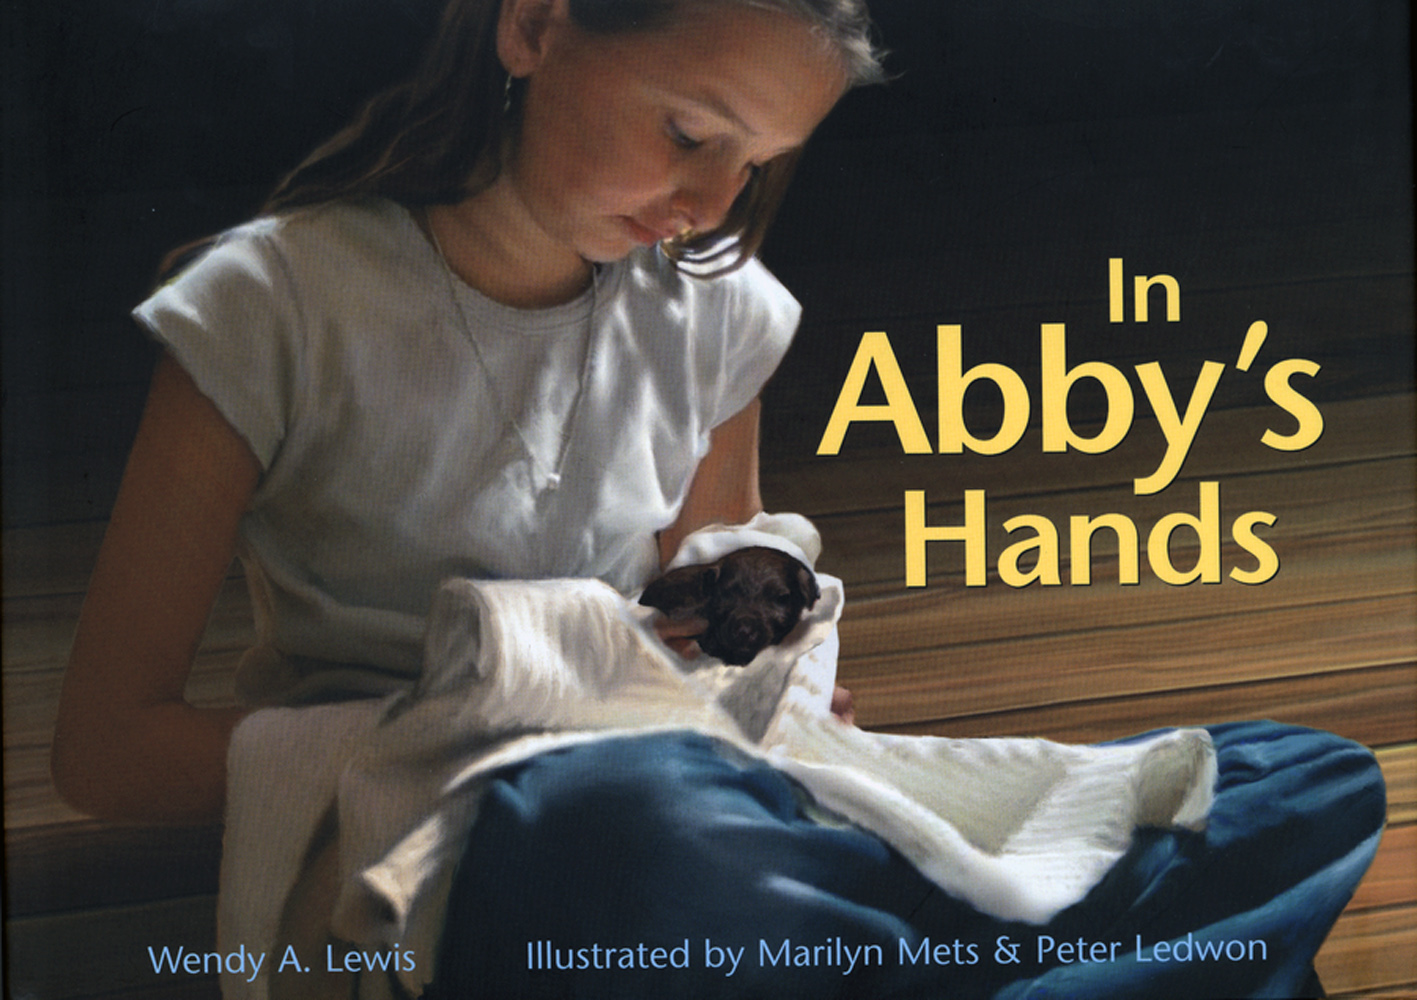 In Abbey's Hands